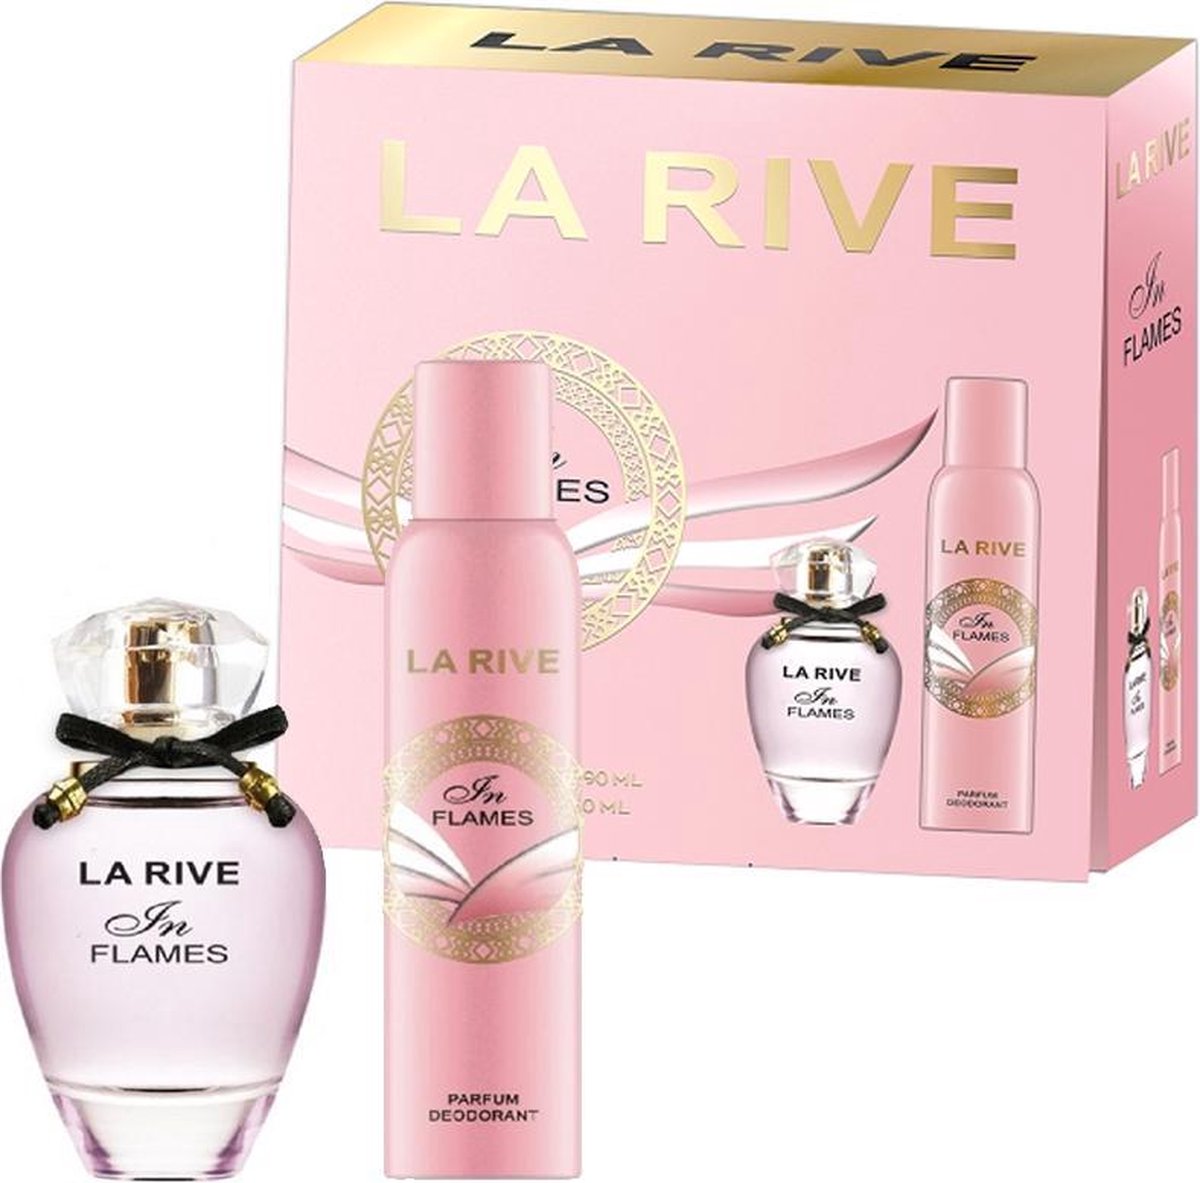 La Rive Set In Flames geschenkset - 90ml eau de parfum + 150ml deodorant - La Rive